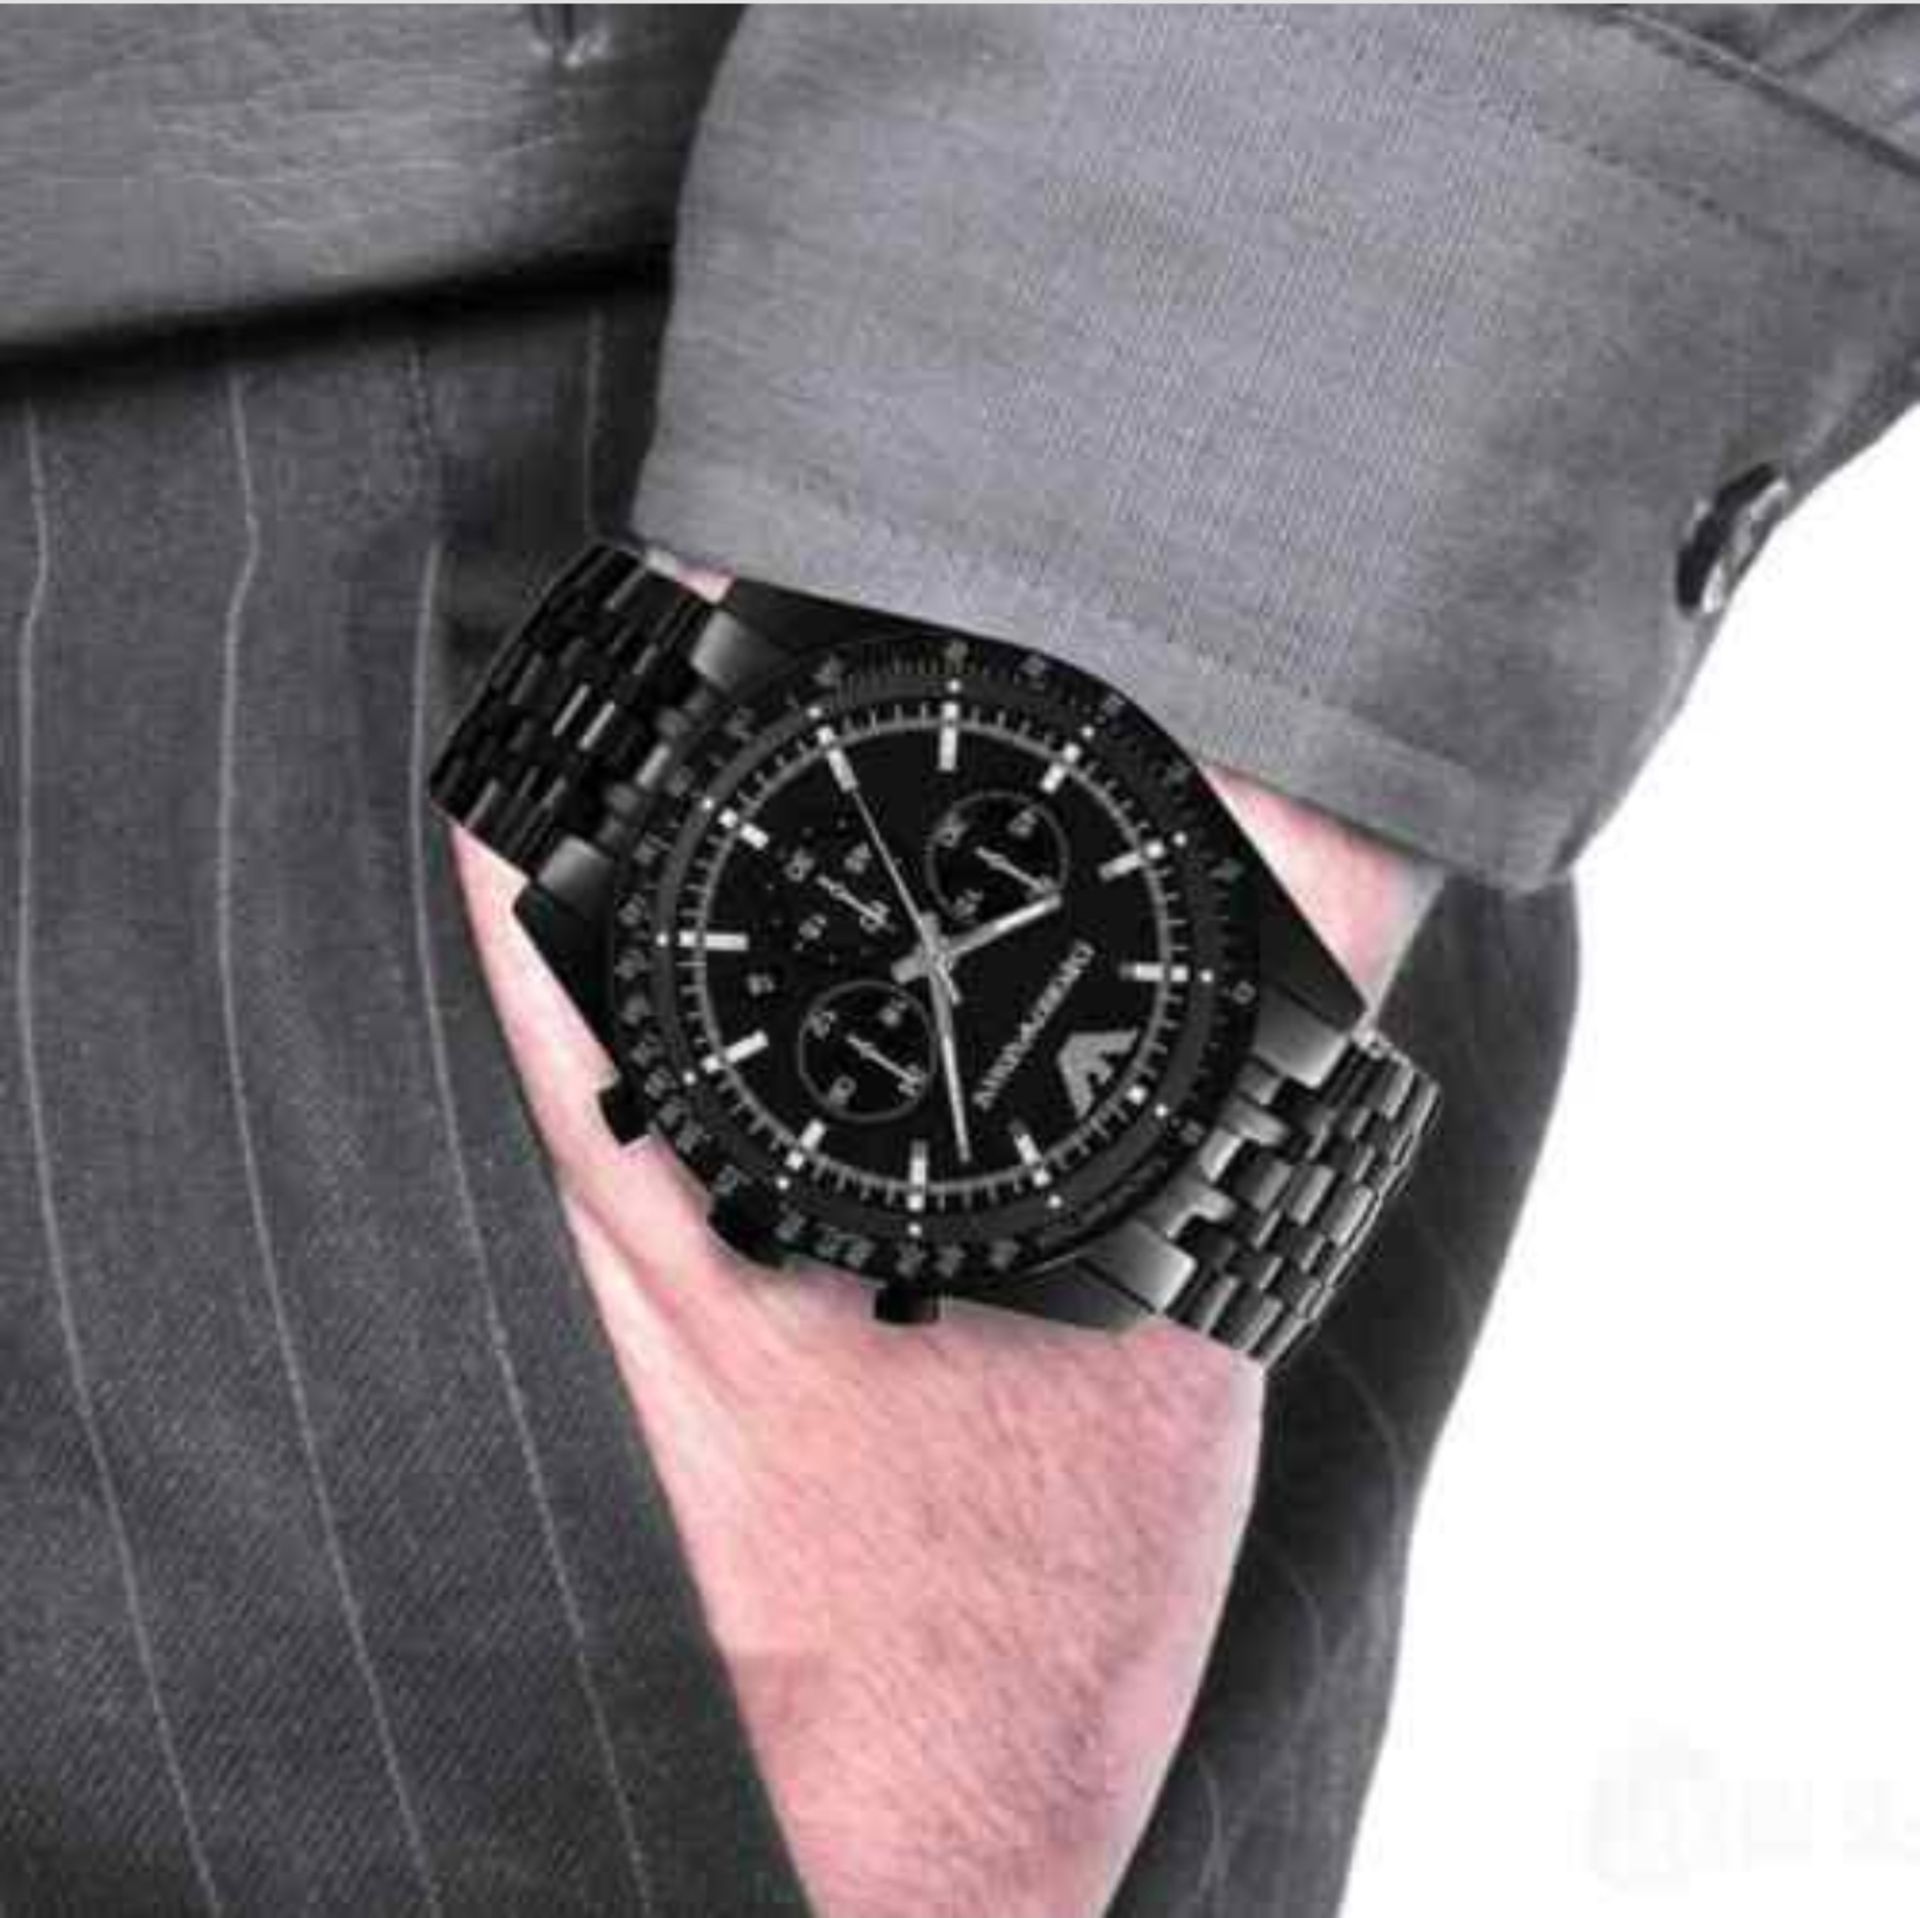 Emporio Armani AR5989 Men's Tazio Black Stainless Steel Bracelet Chronograph Watch - Image 7 of 9